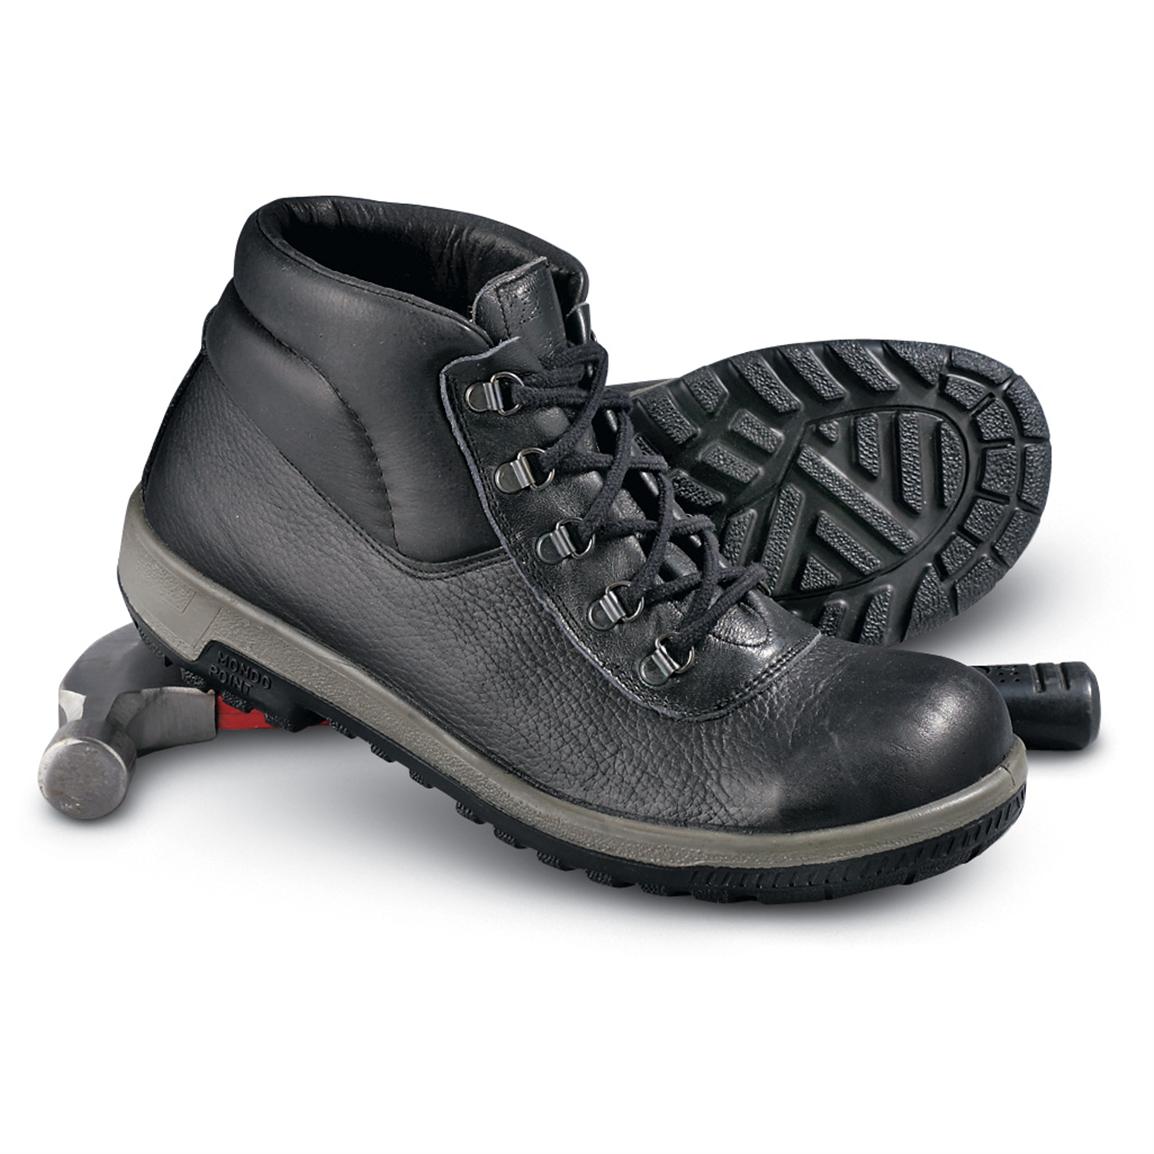 Men's New German Steel Toe Work Boots, Black - 25009, at Sportsman's Guide